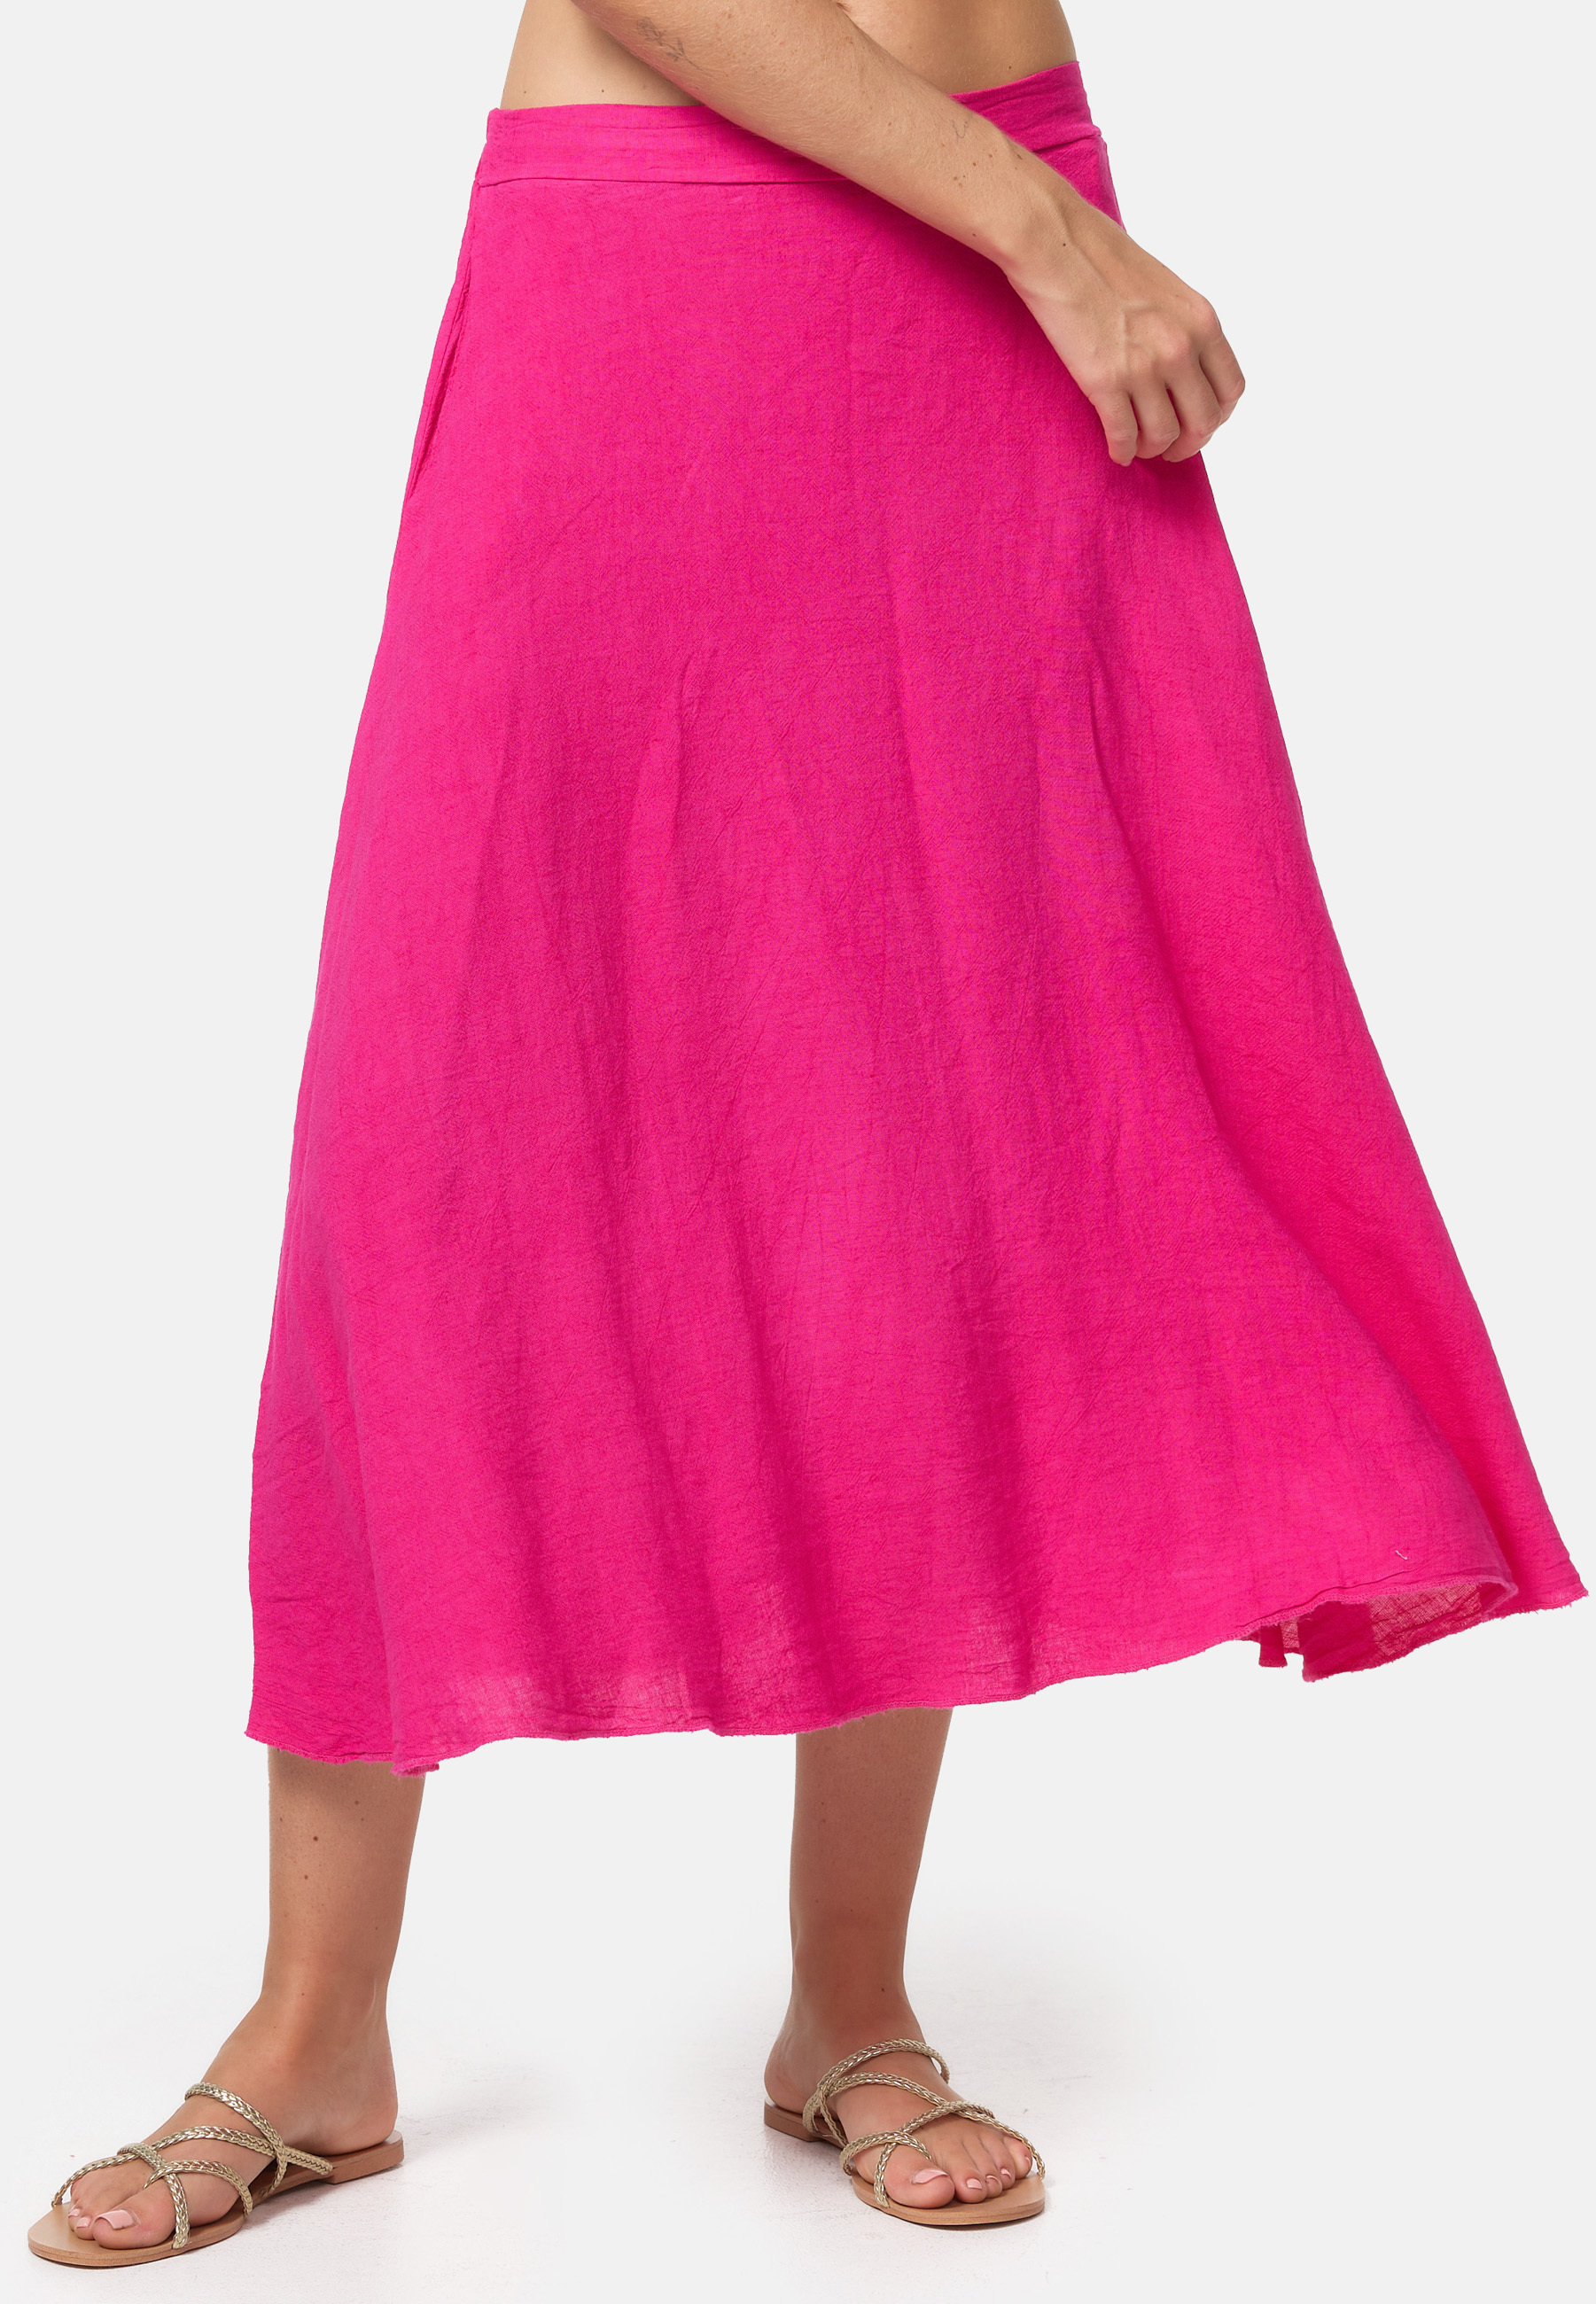 Длинная юбка PM SELECTED Leinen, розовый zcc ct apkt160408 pm ybg202 apkt160408 pm ybg205 apkt160408 pm ybg302 apkt160416 pm ybg202 apkt160408 160416 карбидные вставки с чпу